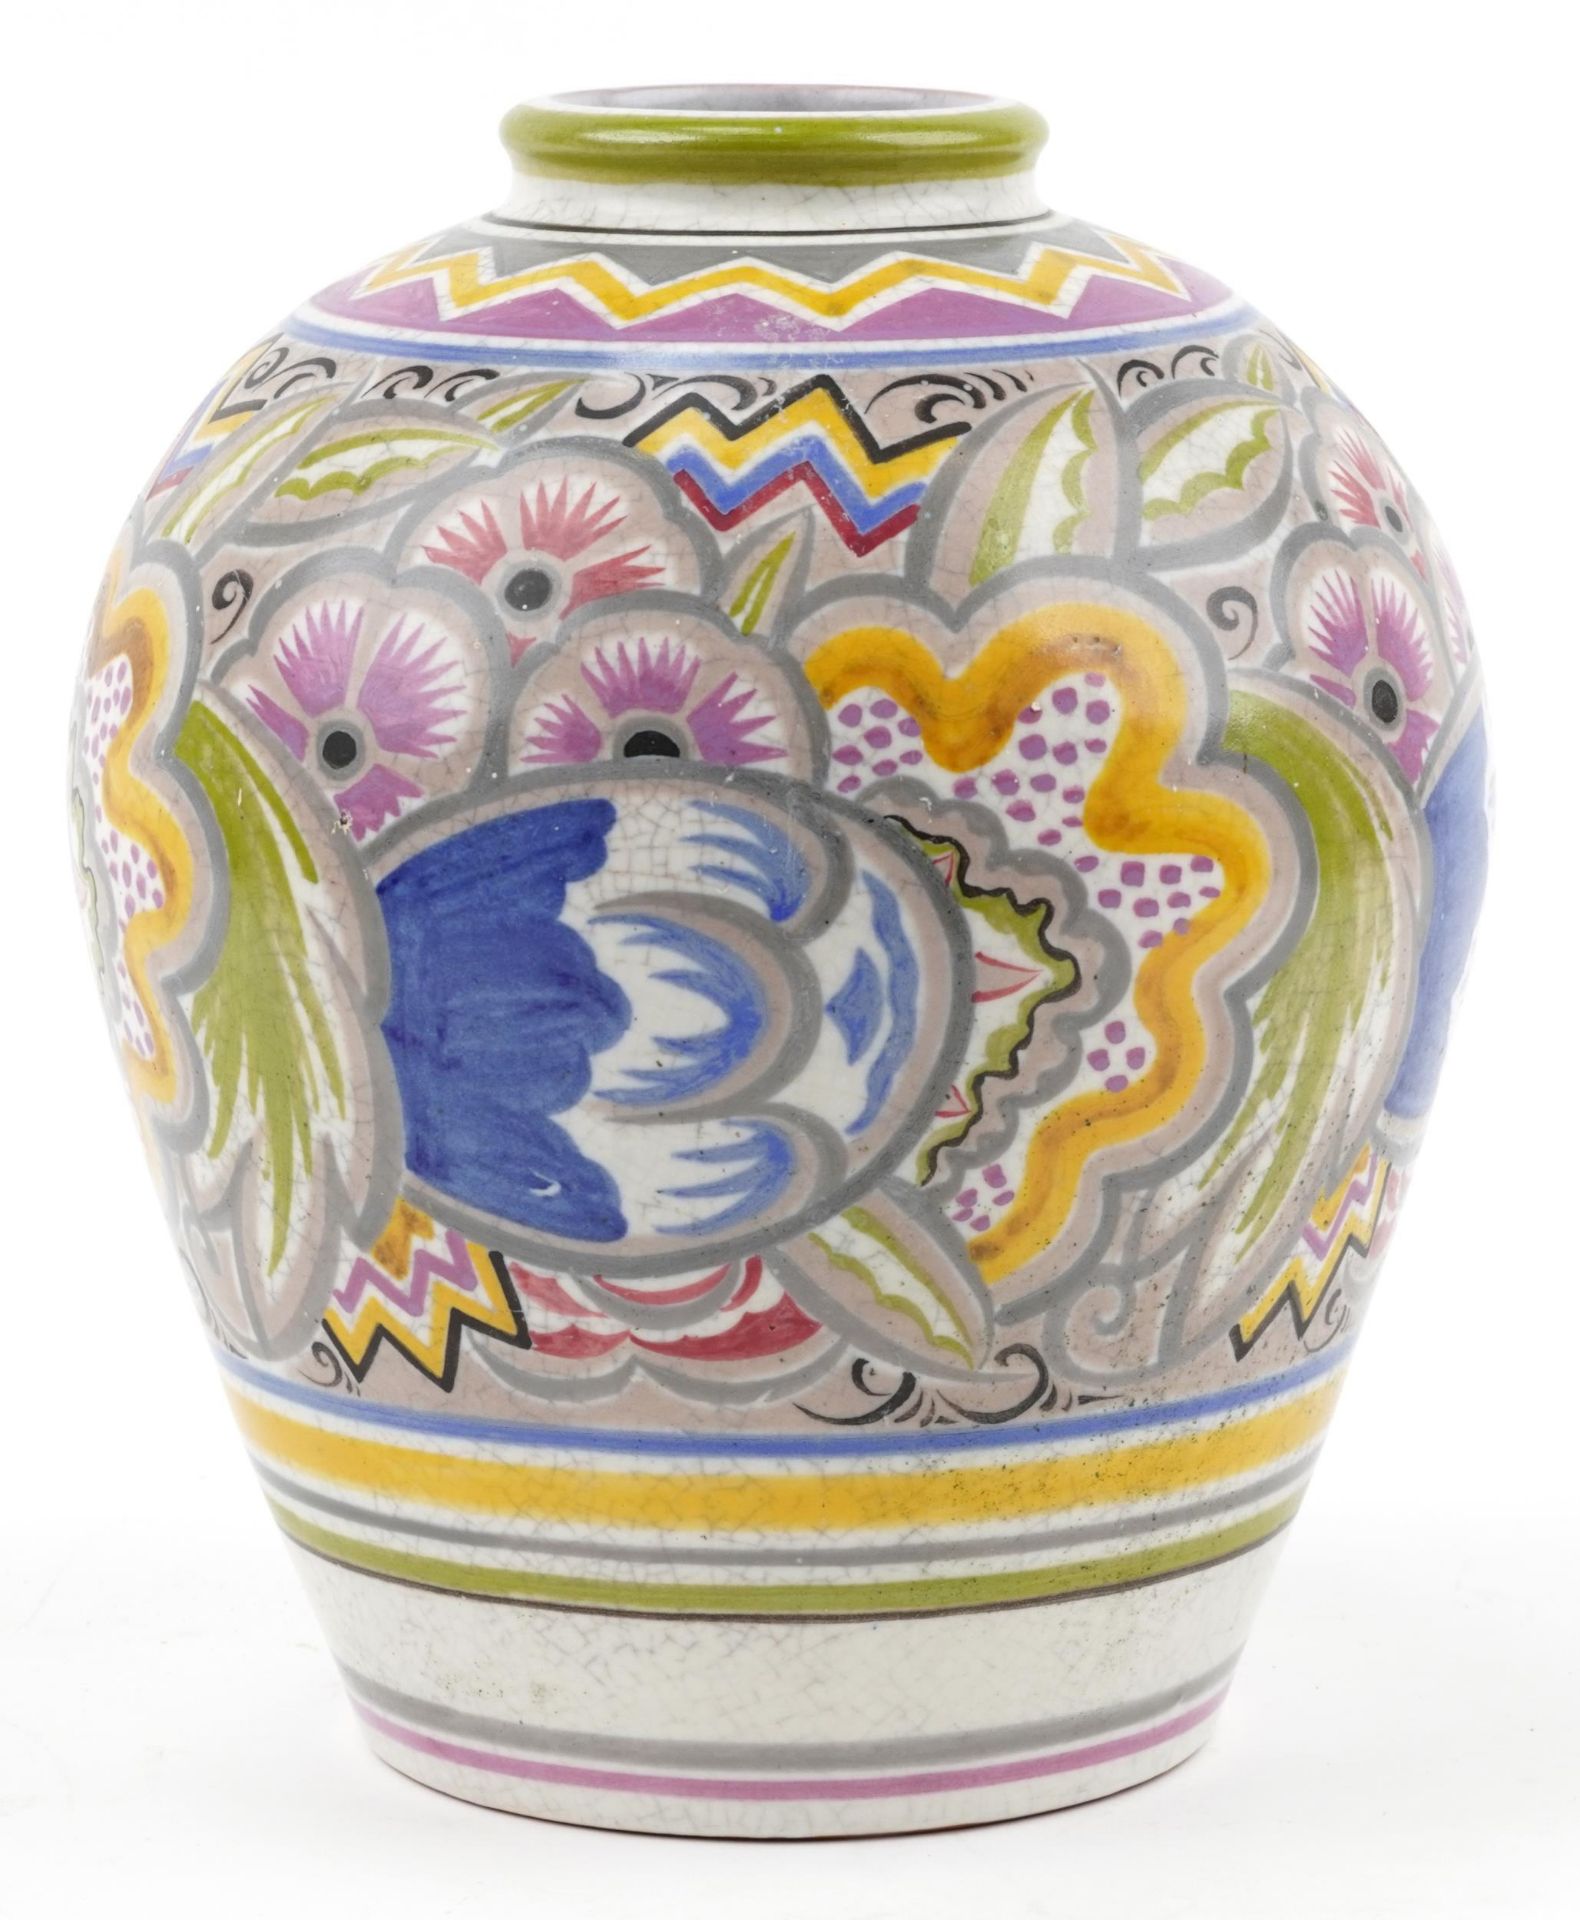 Carter Stabler & Adams, large Poole Pottery vase of ovoid form designed by Truda Carter, hand